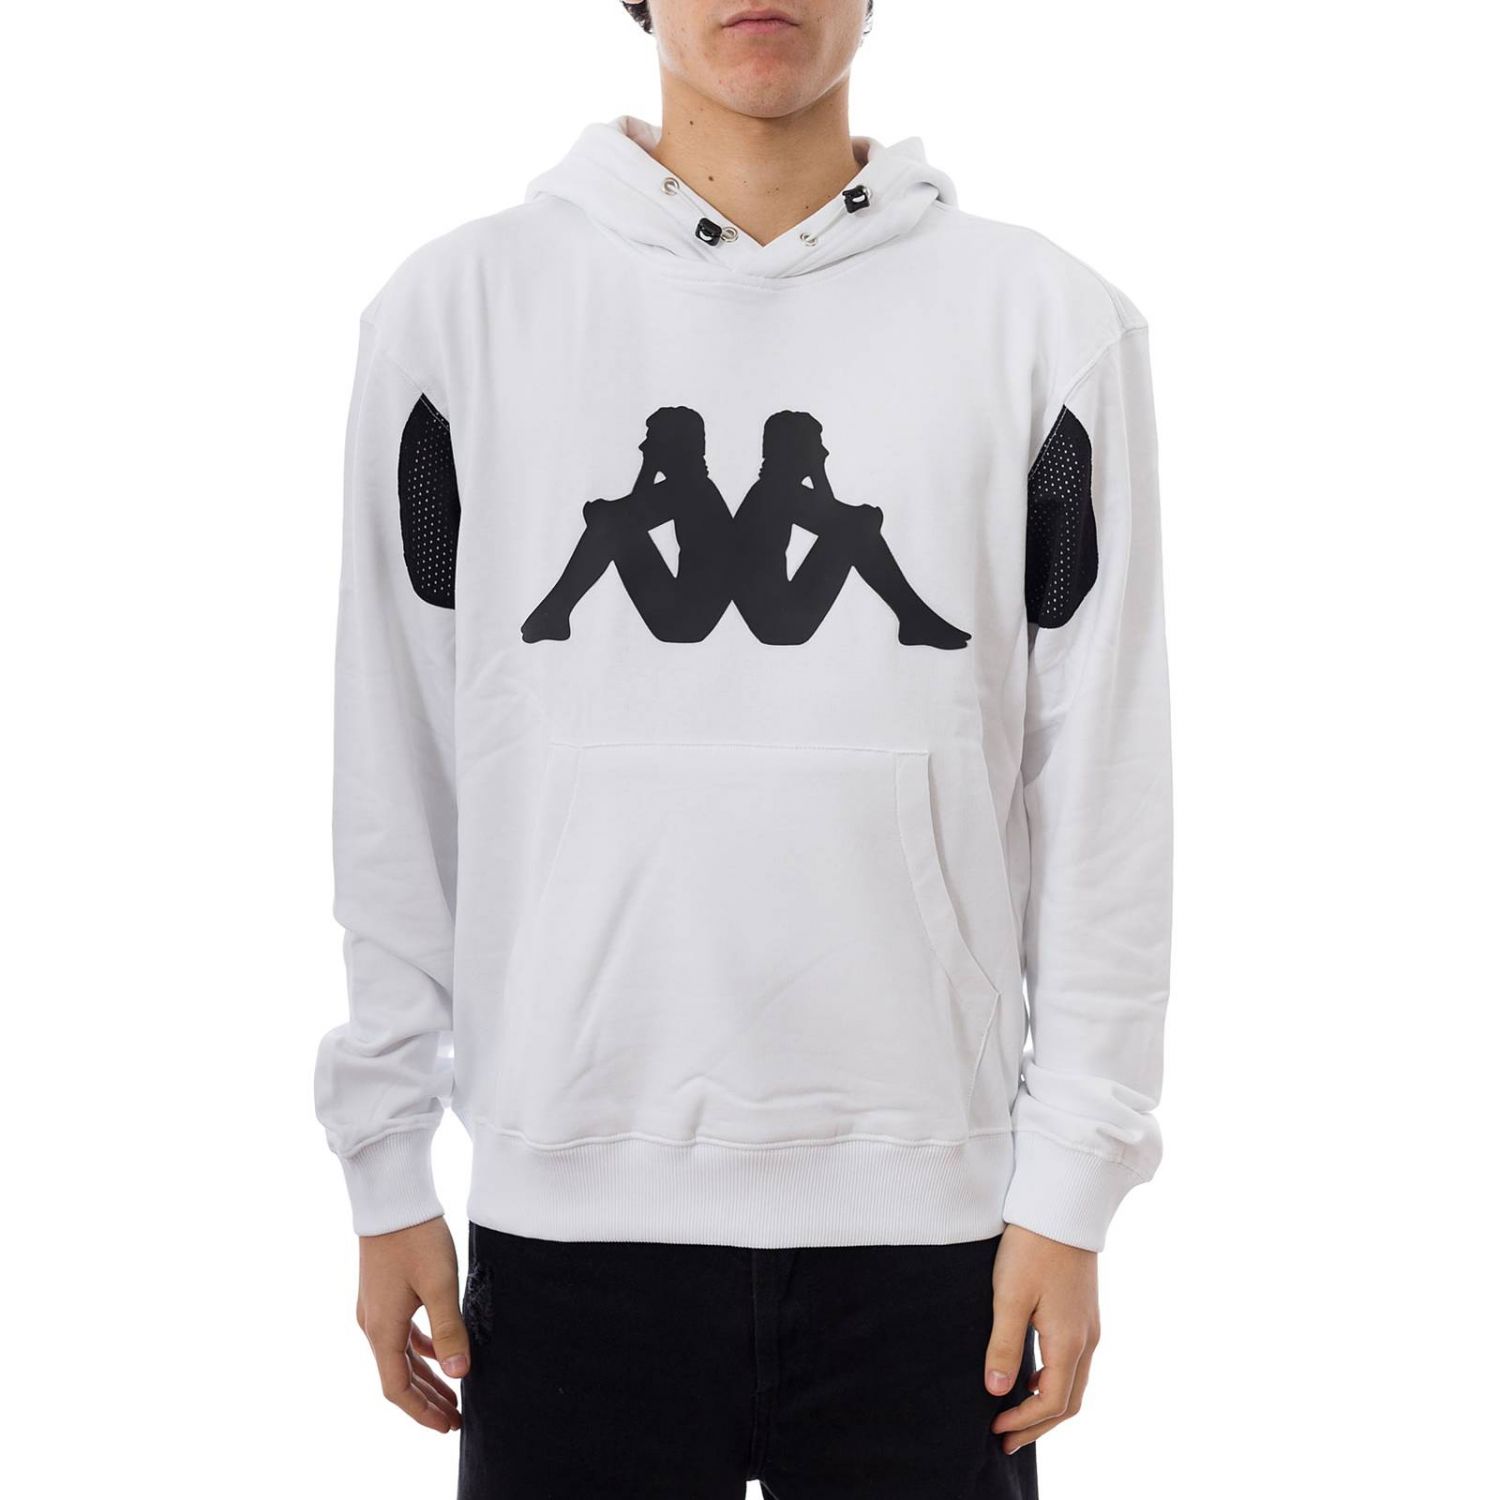 Kappa Kontroll Outlet: Sweatshirt men - White | Sweatshirt Kappa ...